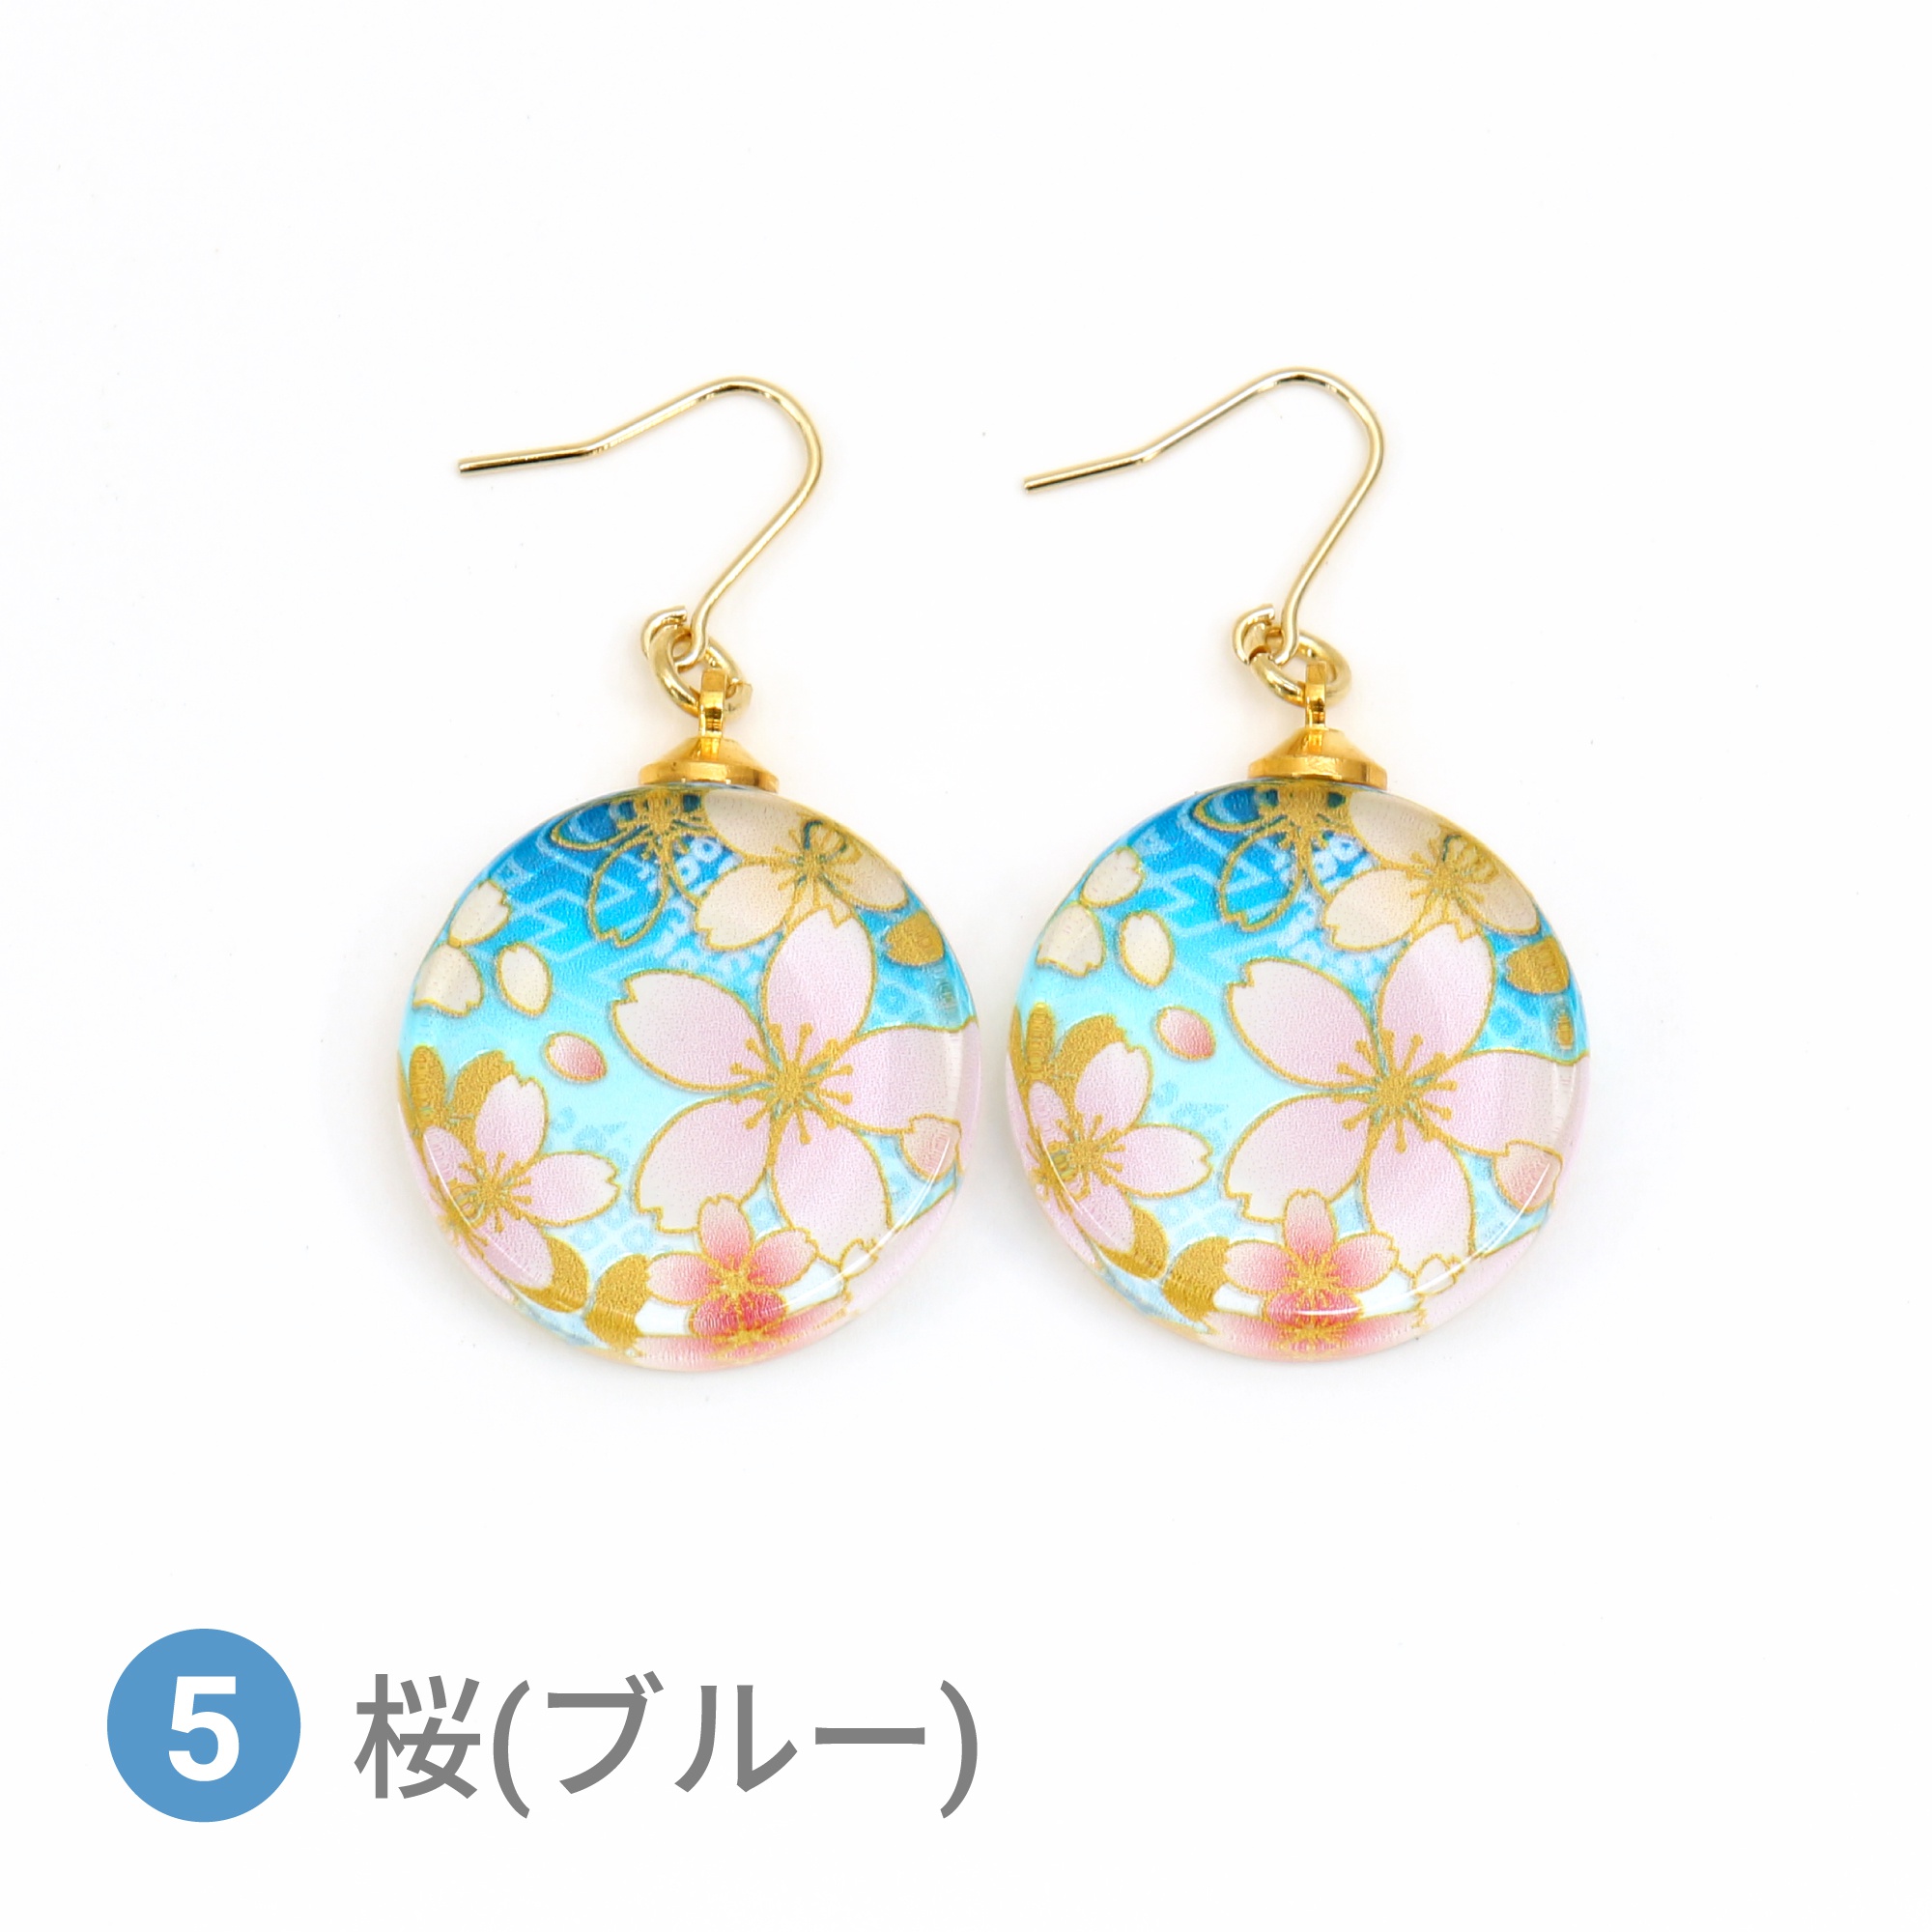 Glass accessories Pierced Earring WABANA Cherry blossom blue round shape